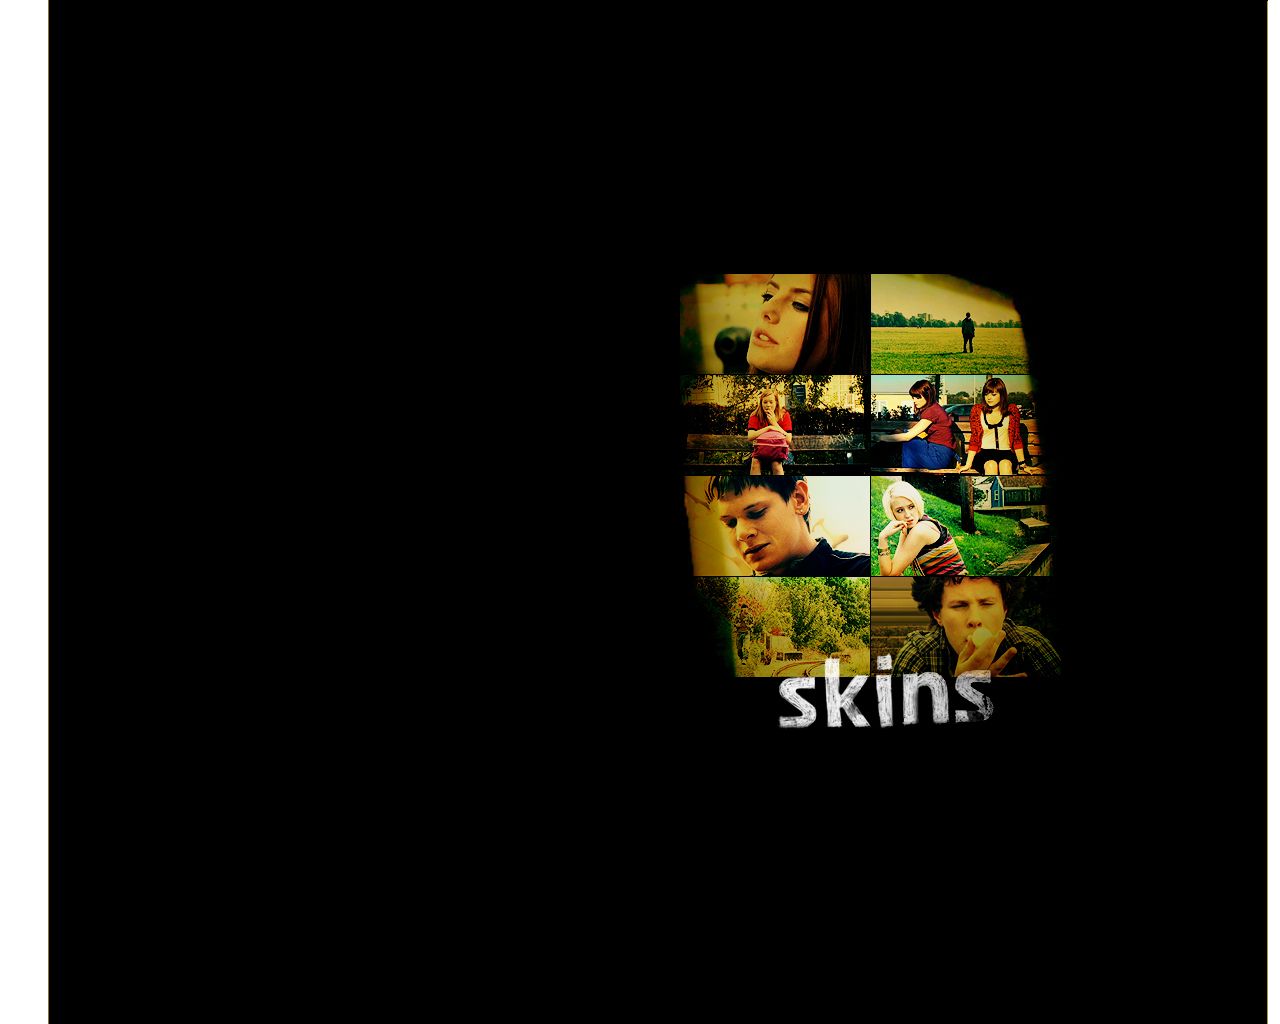 Skins - Skins Wallpaper (6051105) - Fanpop